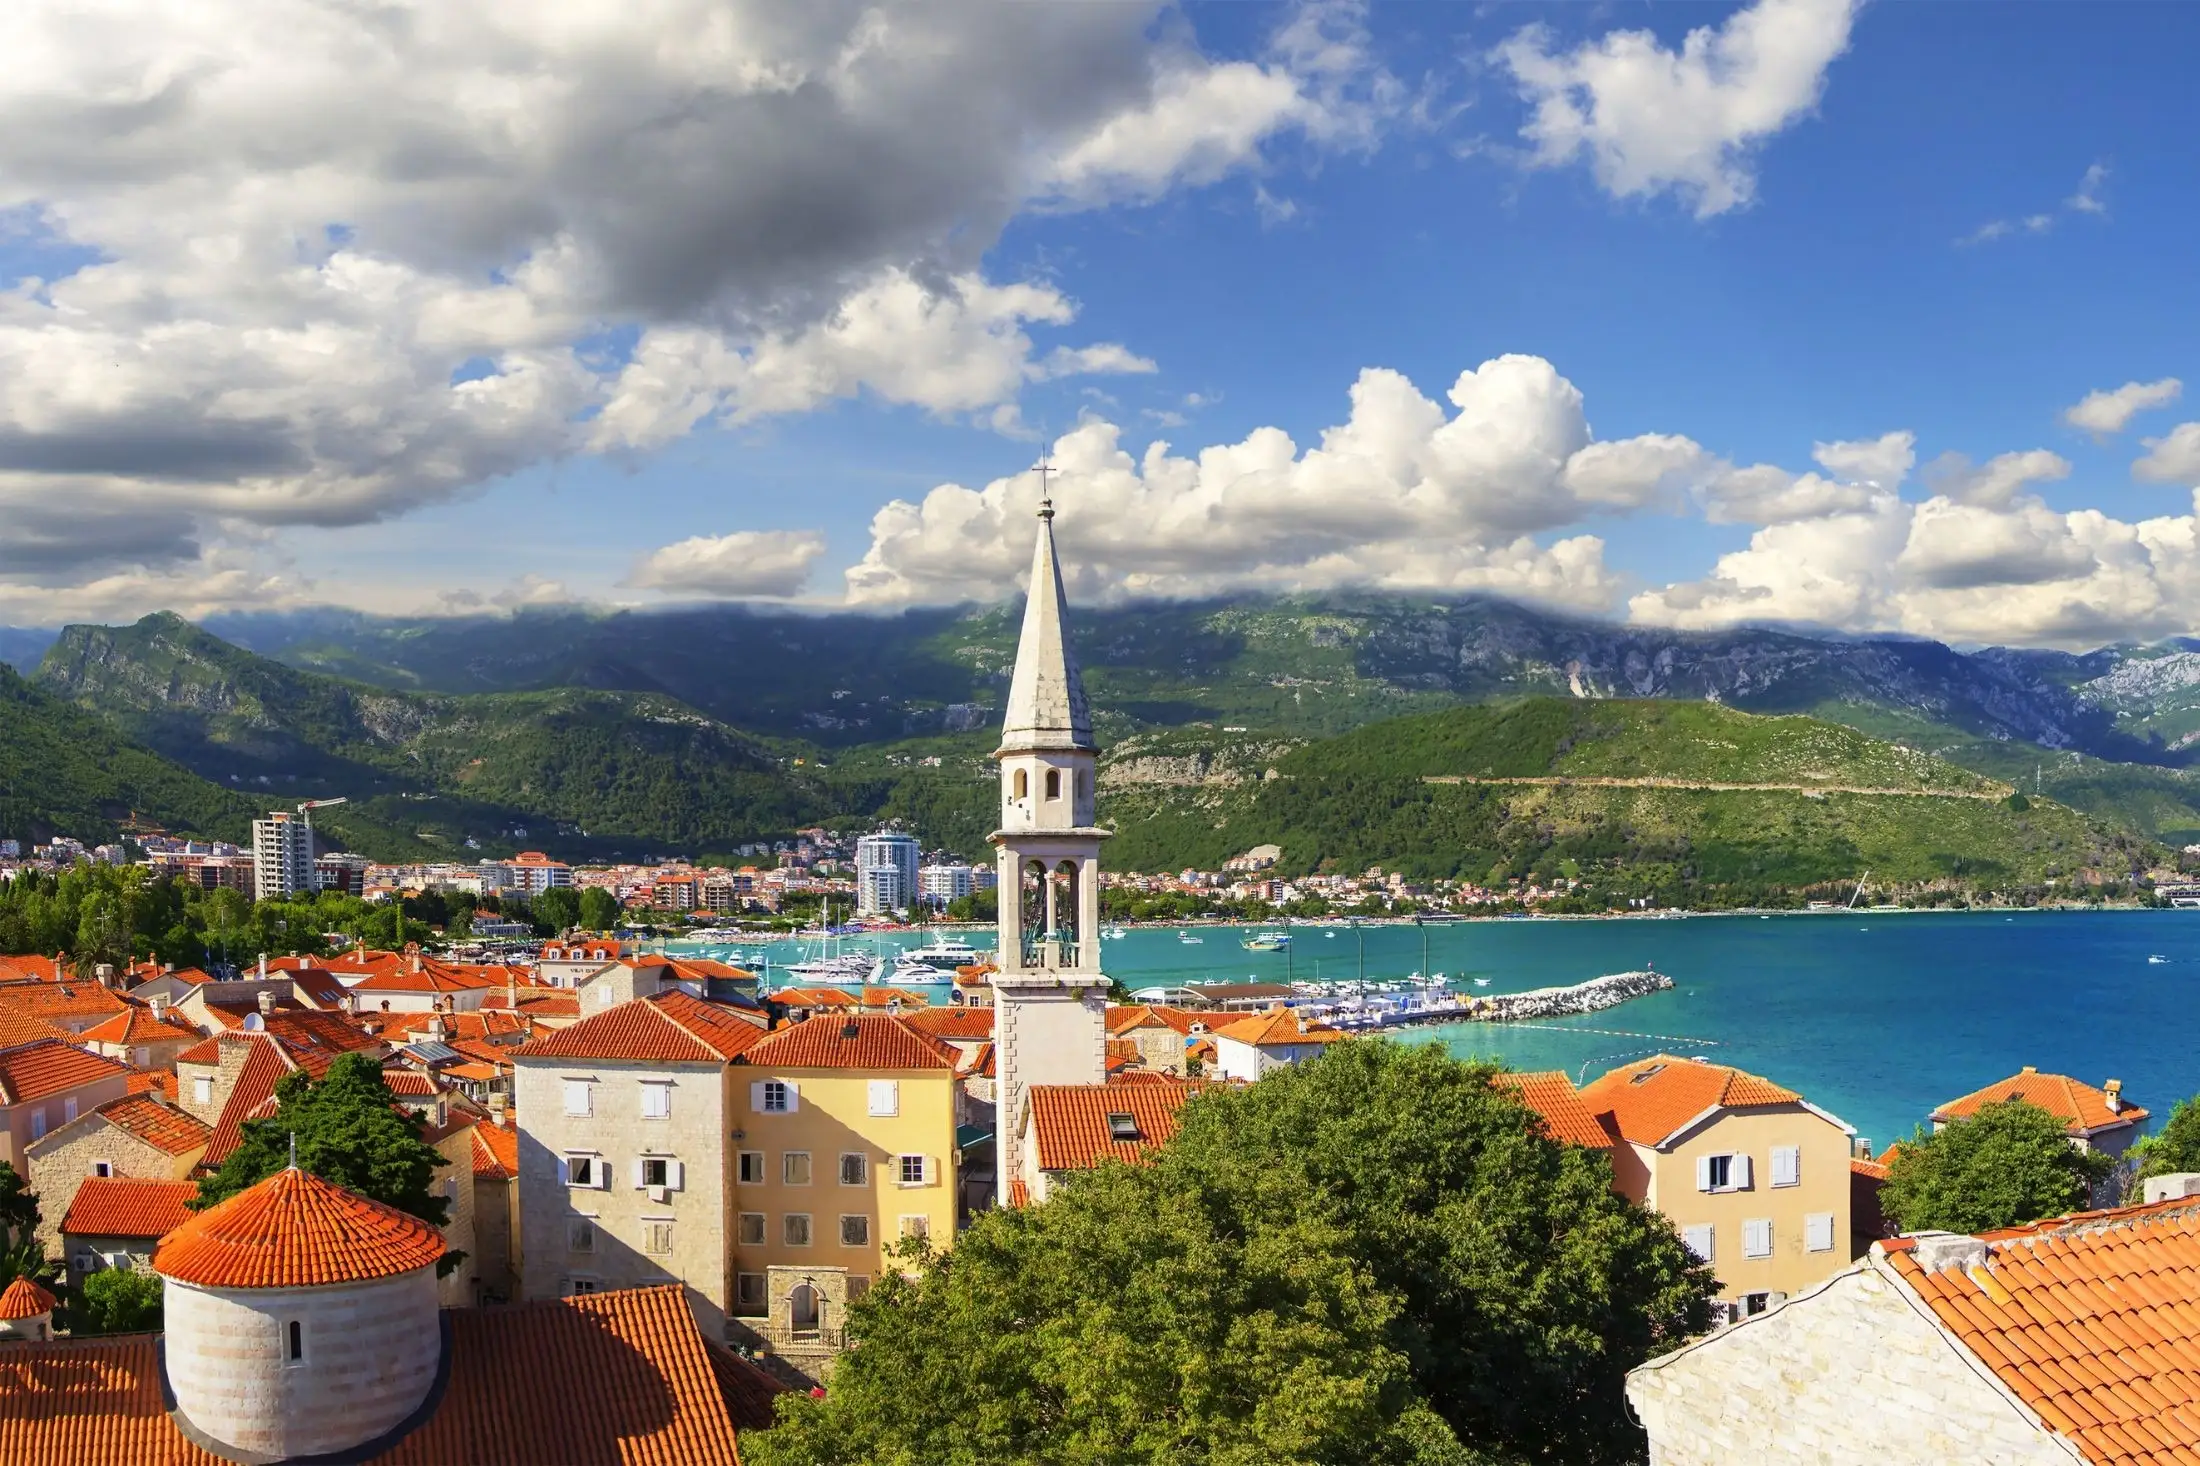 Budva - Hotspot of the Adriatic